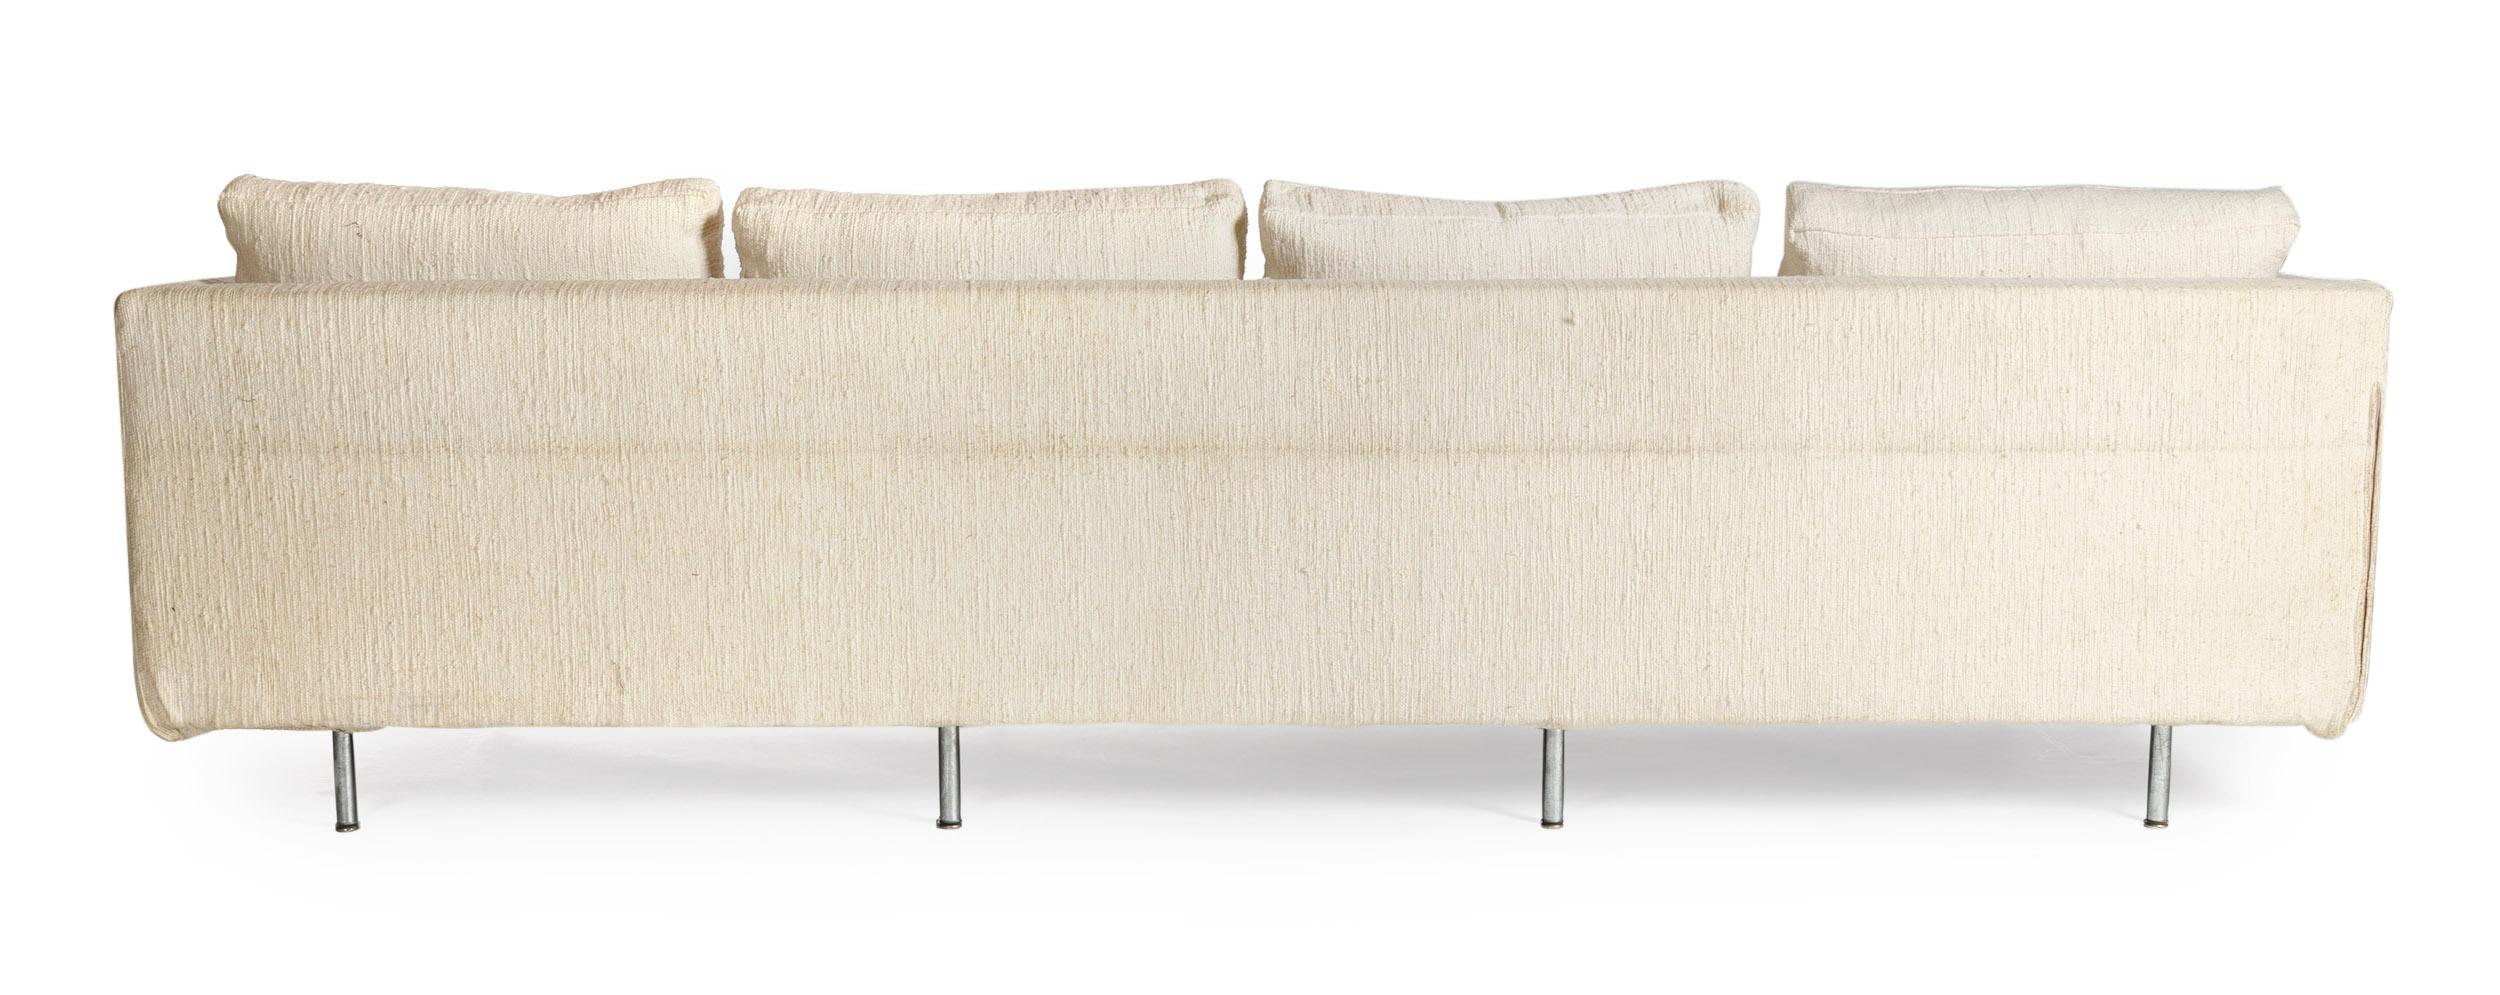 sofa by design